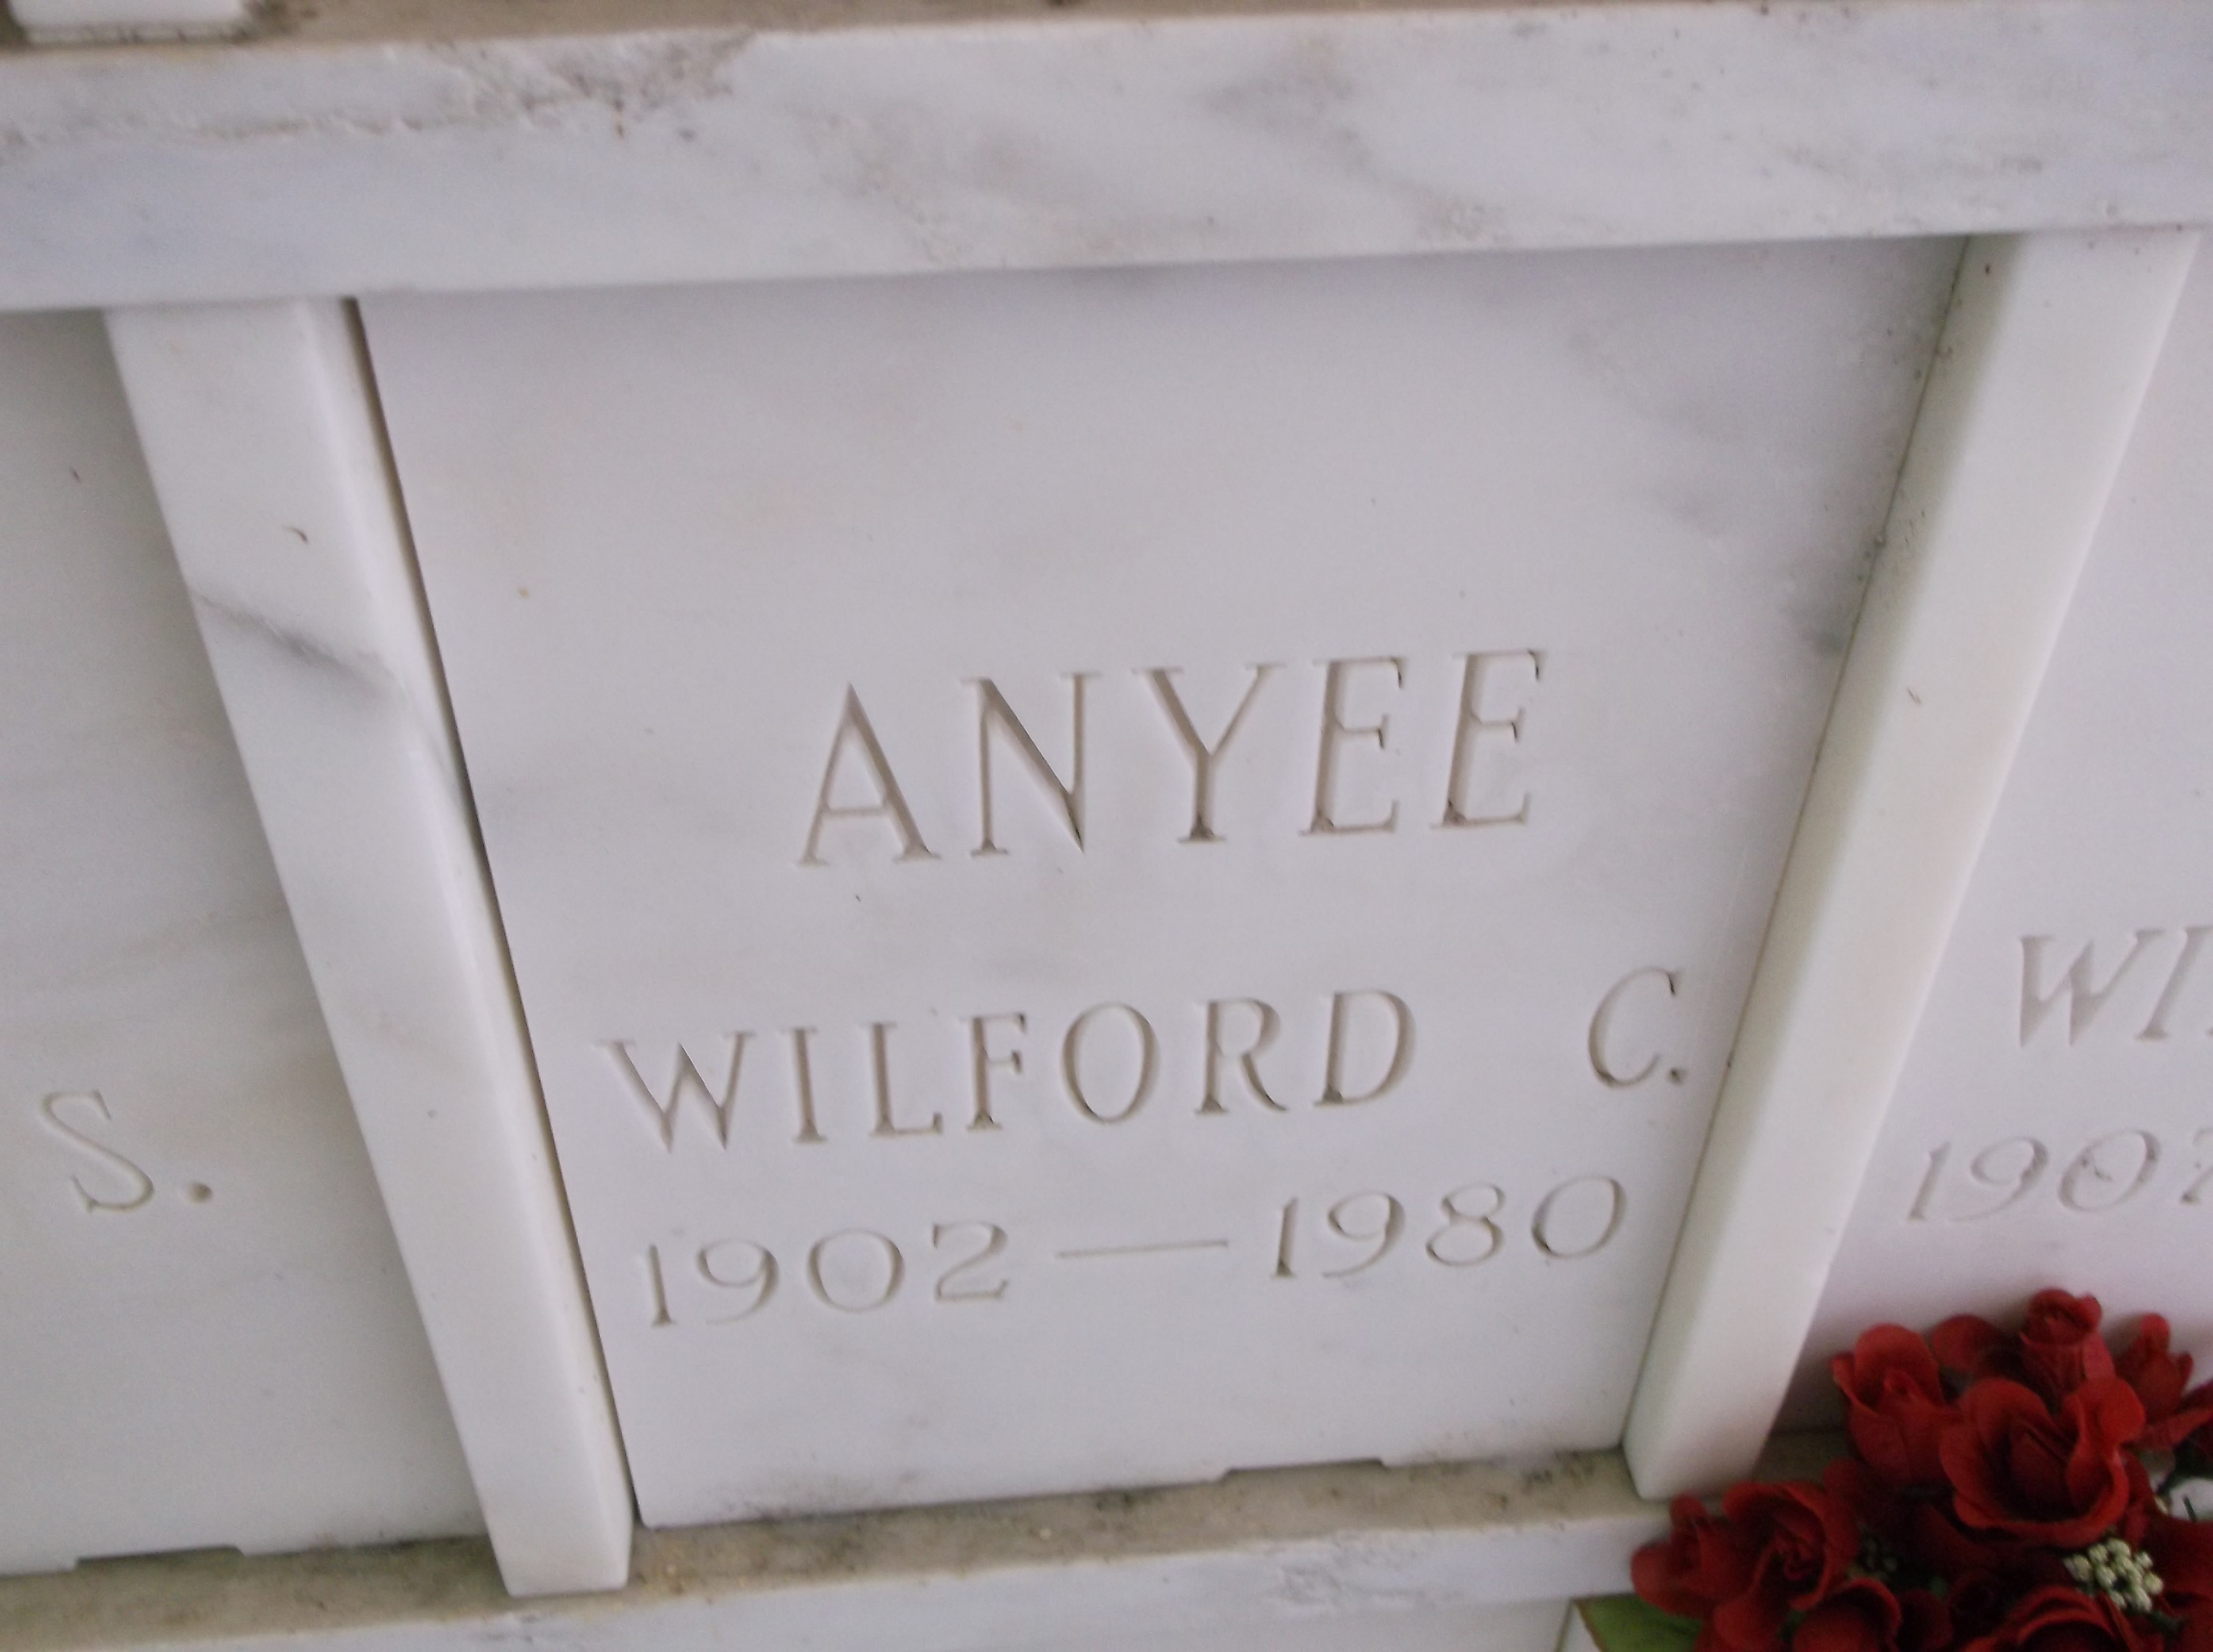 Wilford C Anyee